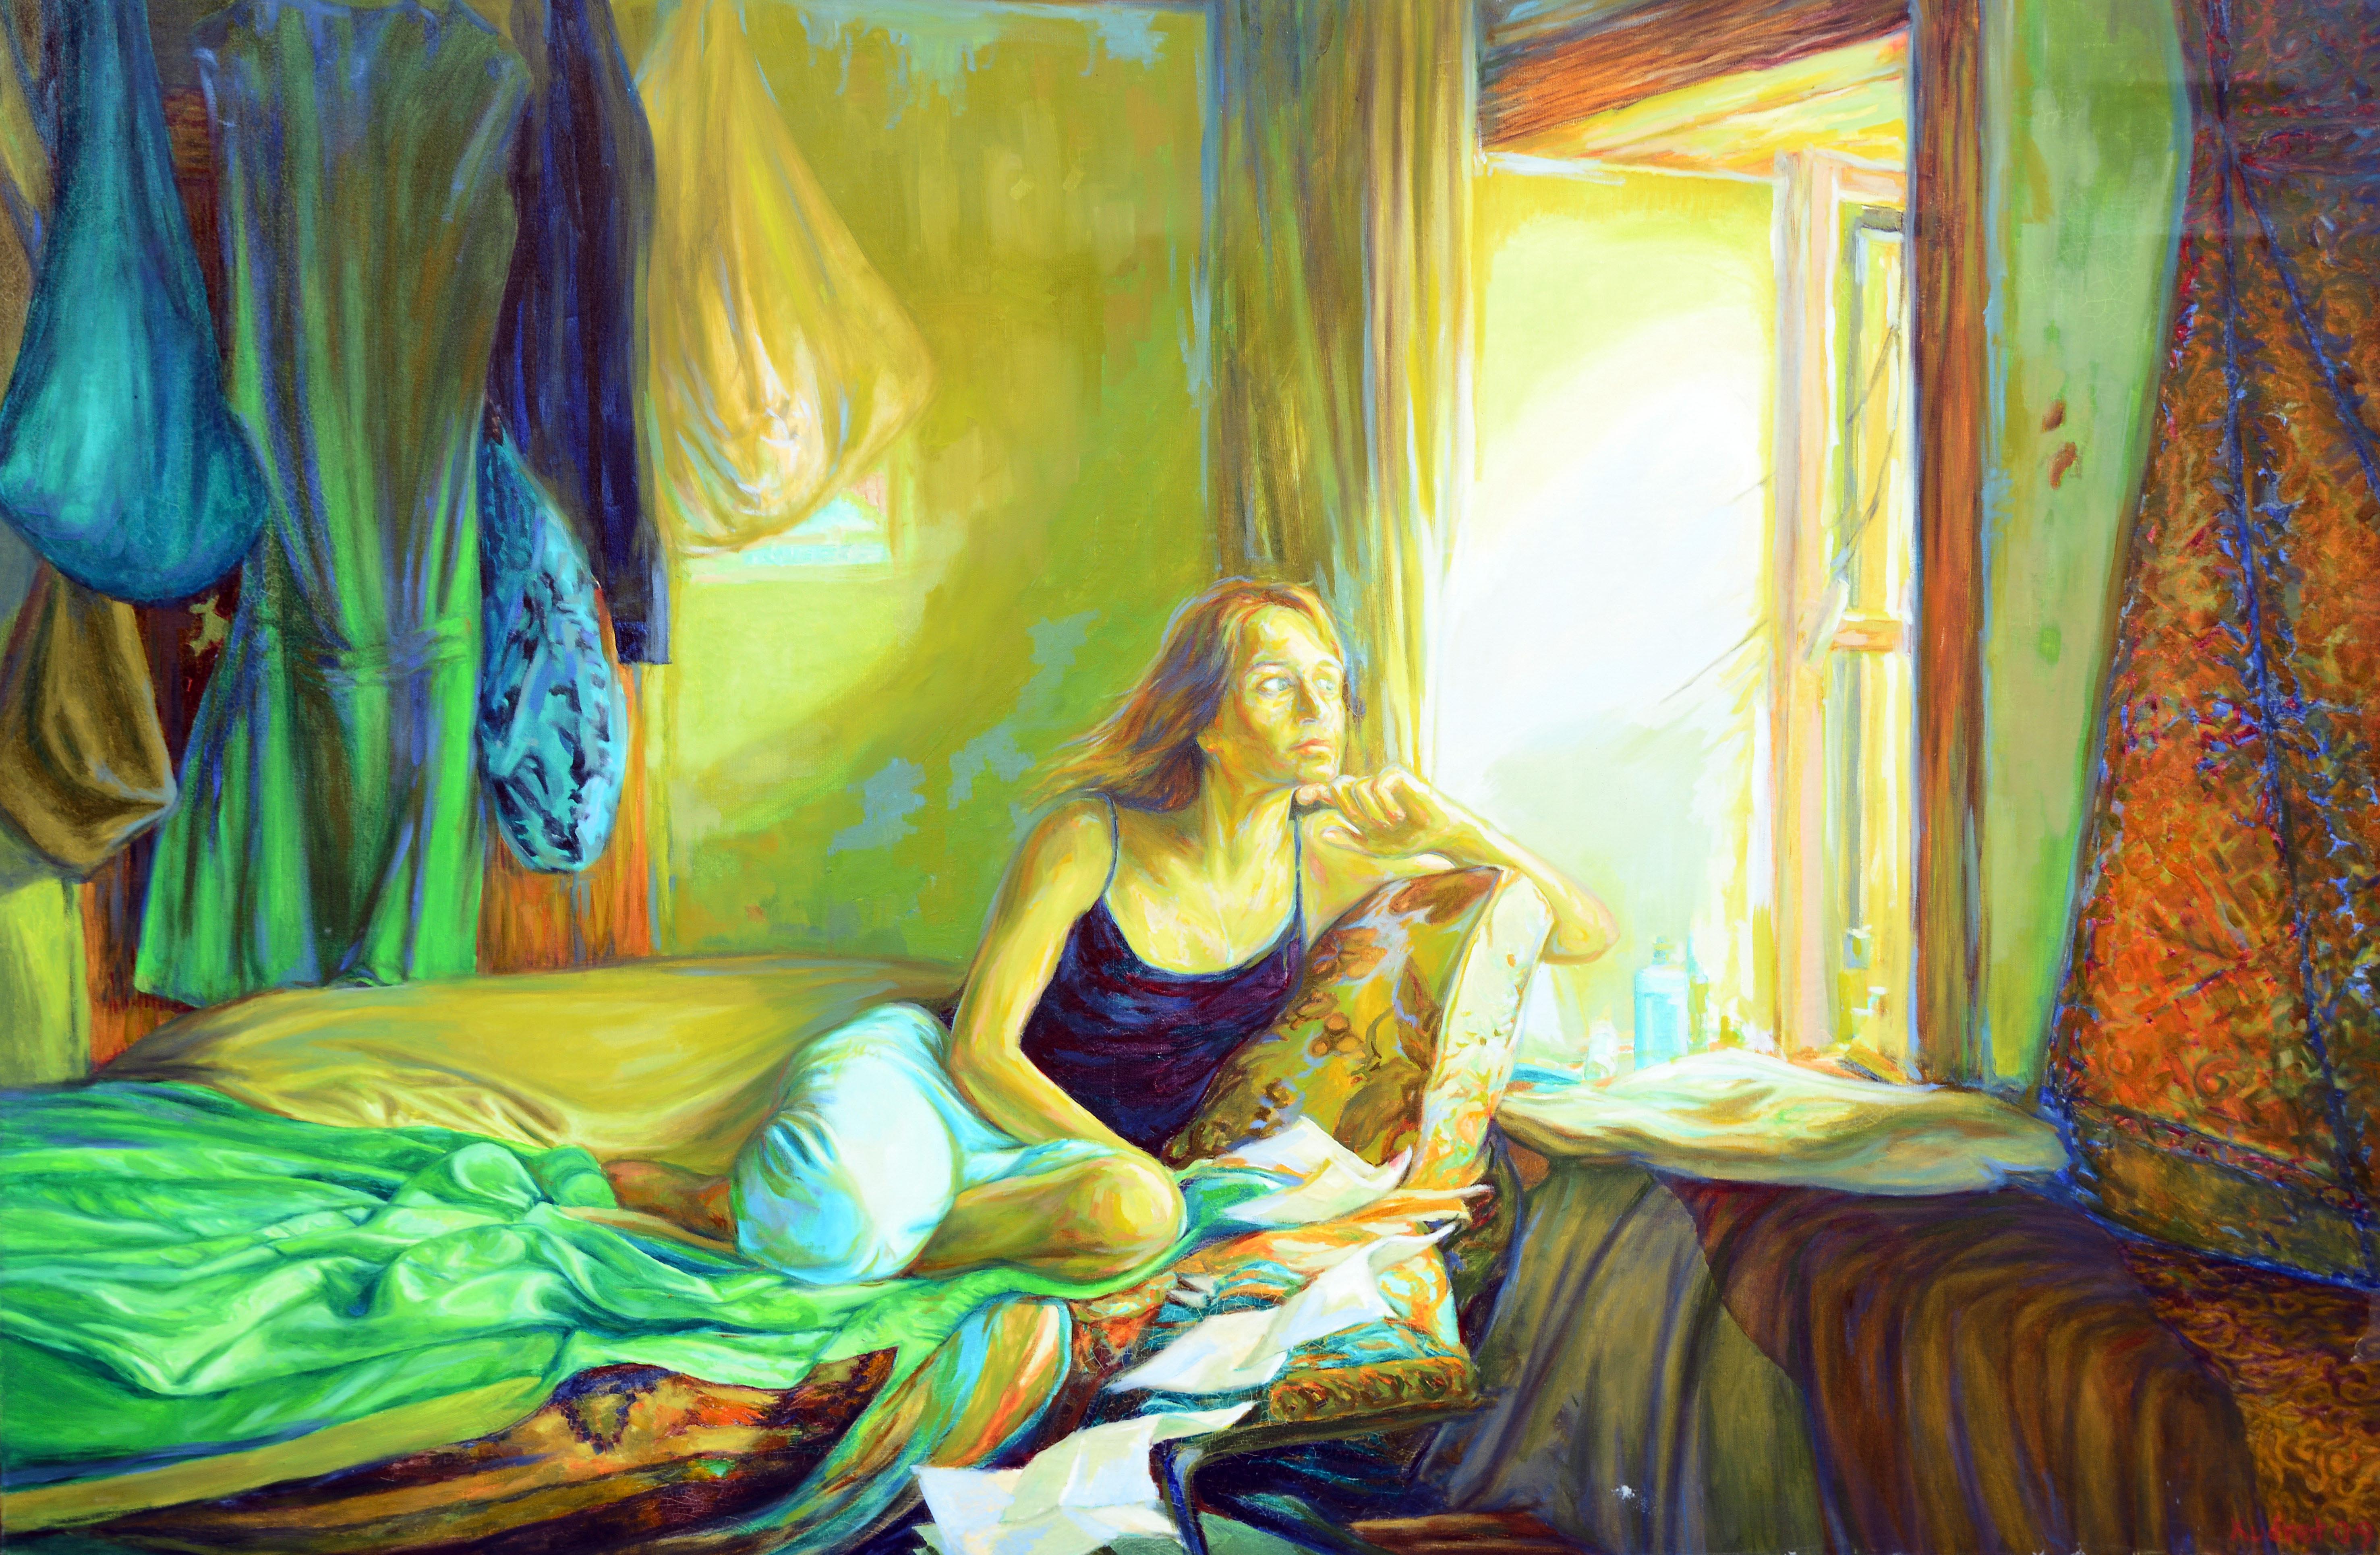 İsimsiz- Untitled, 2009, Tuval üzerine yağlıboya- Oil on canvas, 100x150 cm